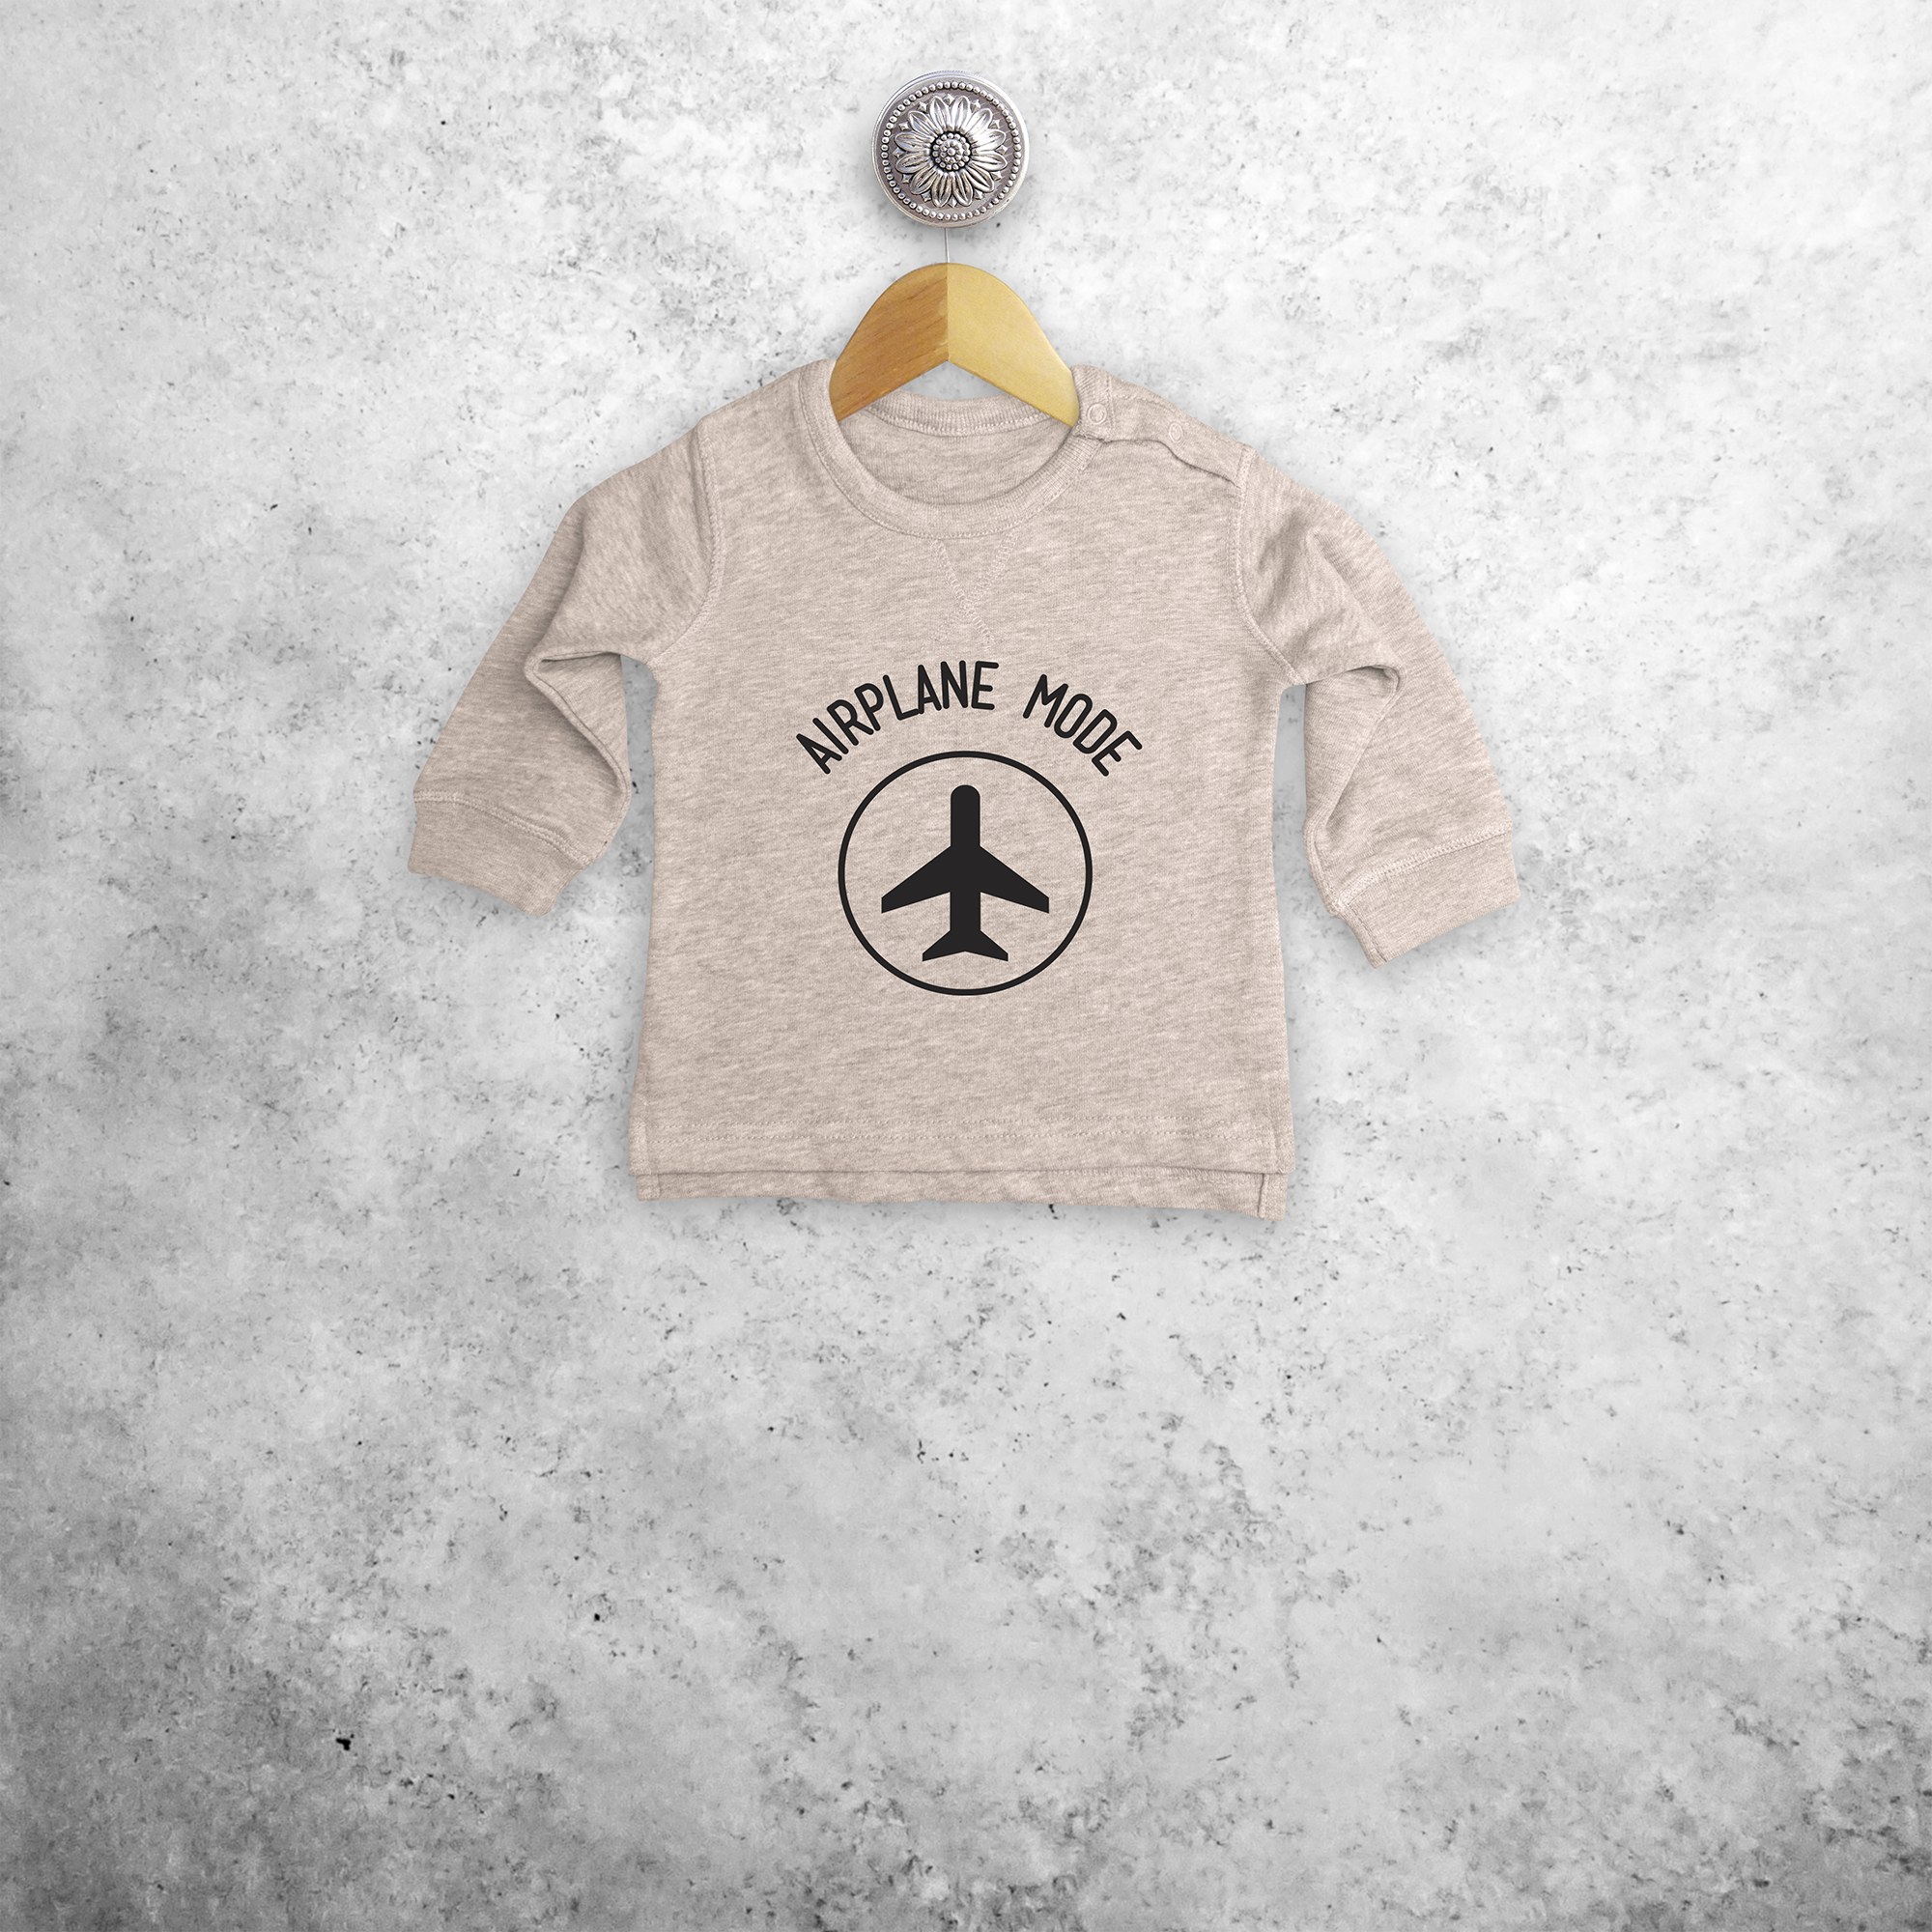 'Airplane mode' baby sweater